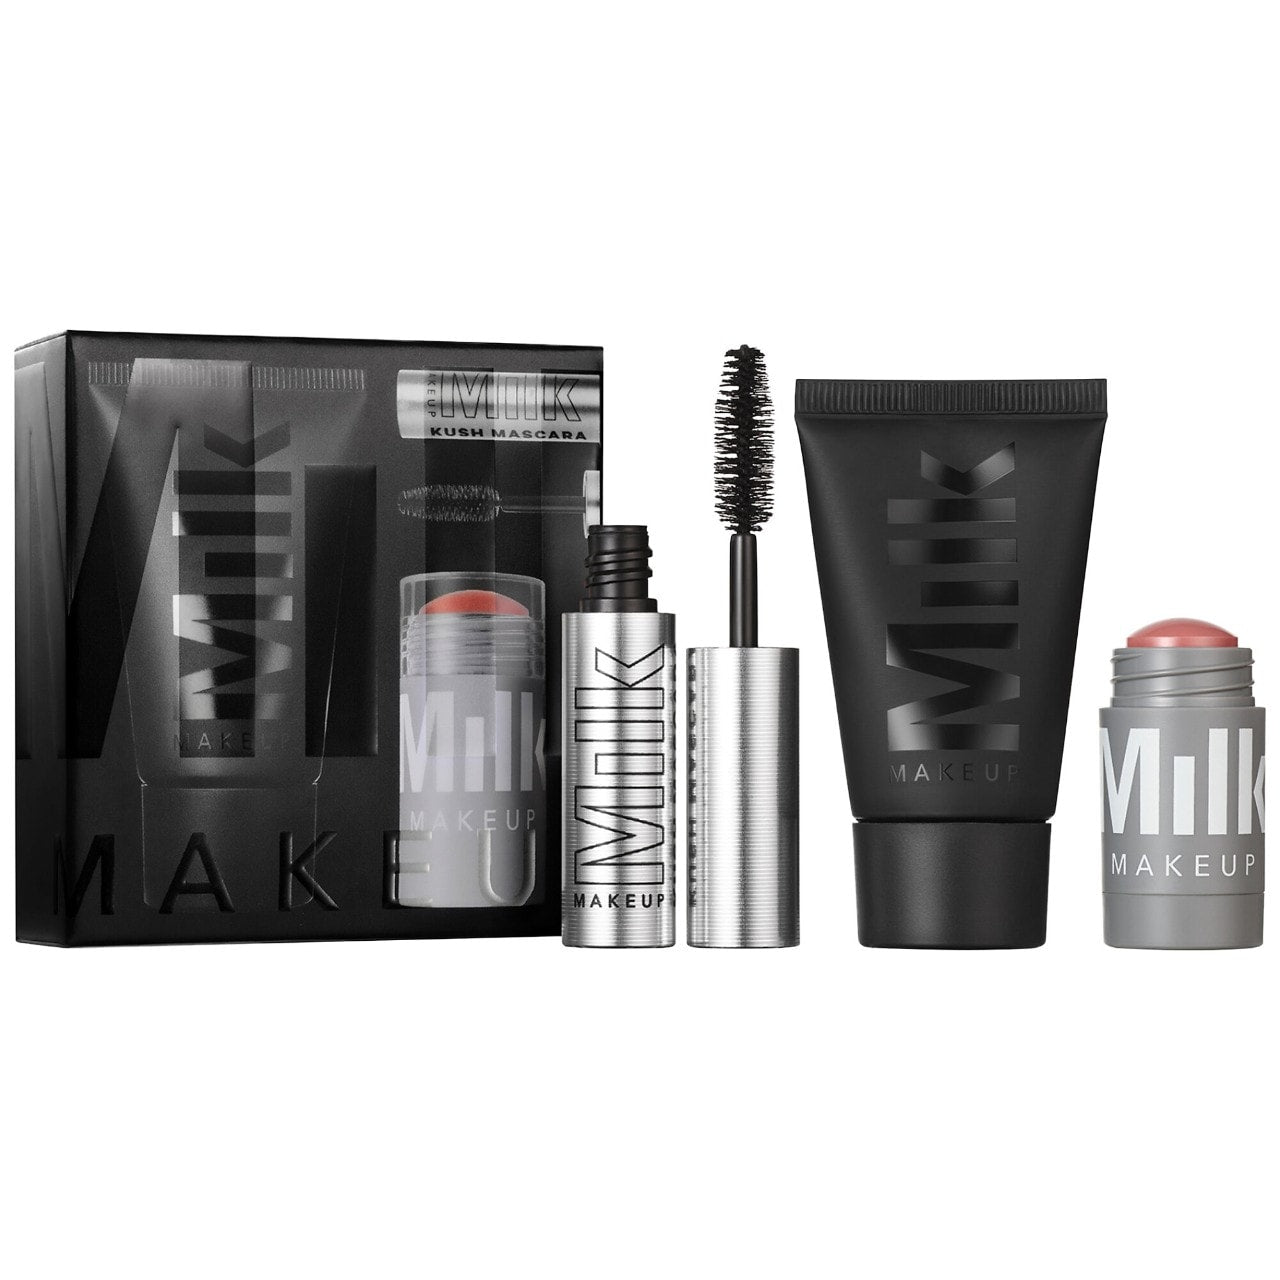 MILK - The Travel Stash Makeup Set